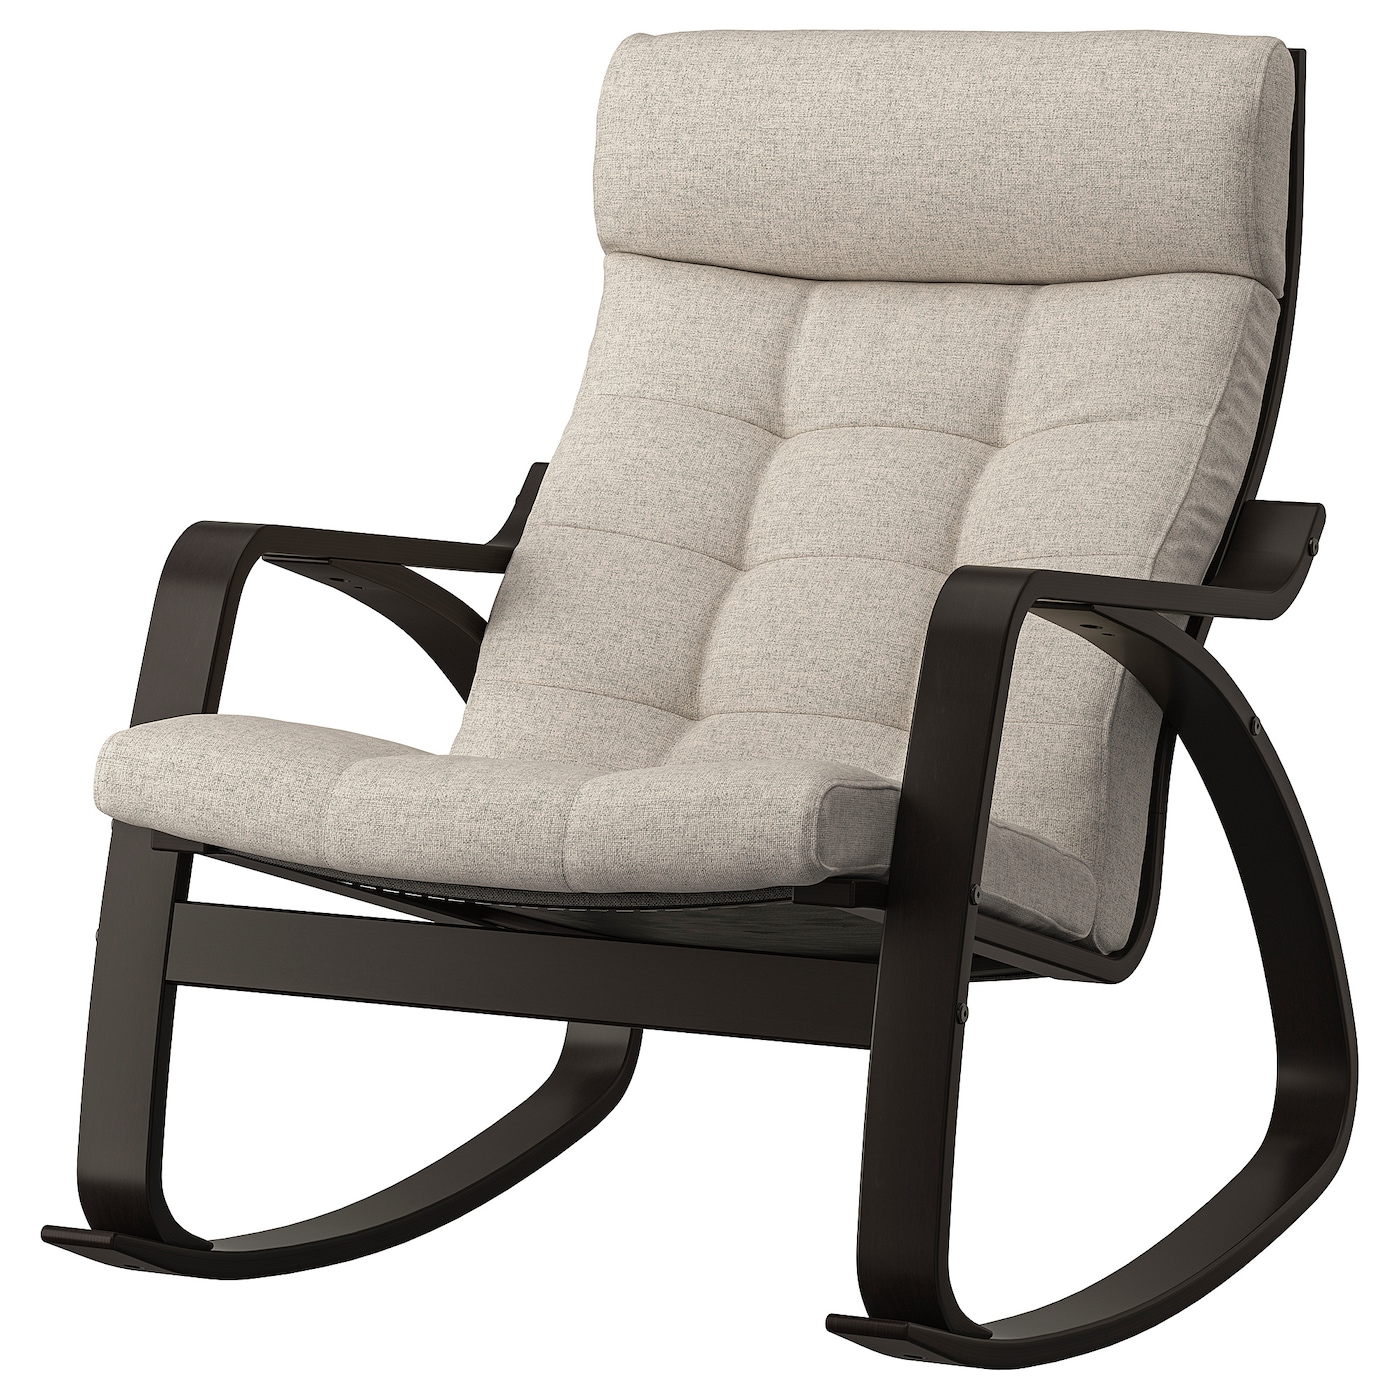 ПОЭНГ Кресло-качалка, черно-коричневый/Гуннаред бежевый POÄNG IKEA кресло качалка берген